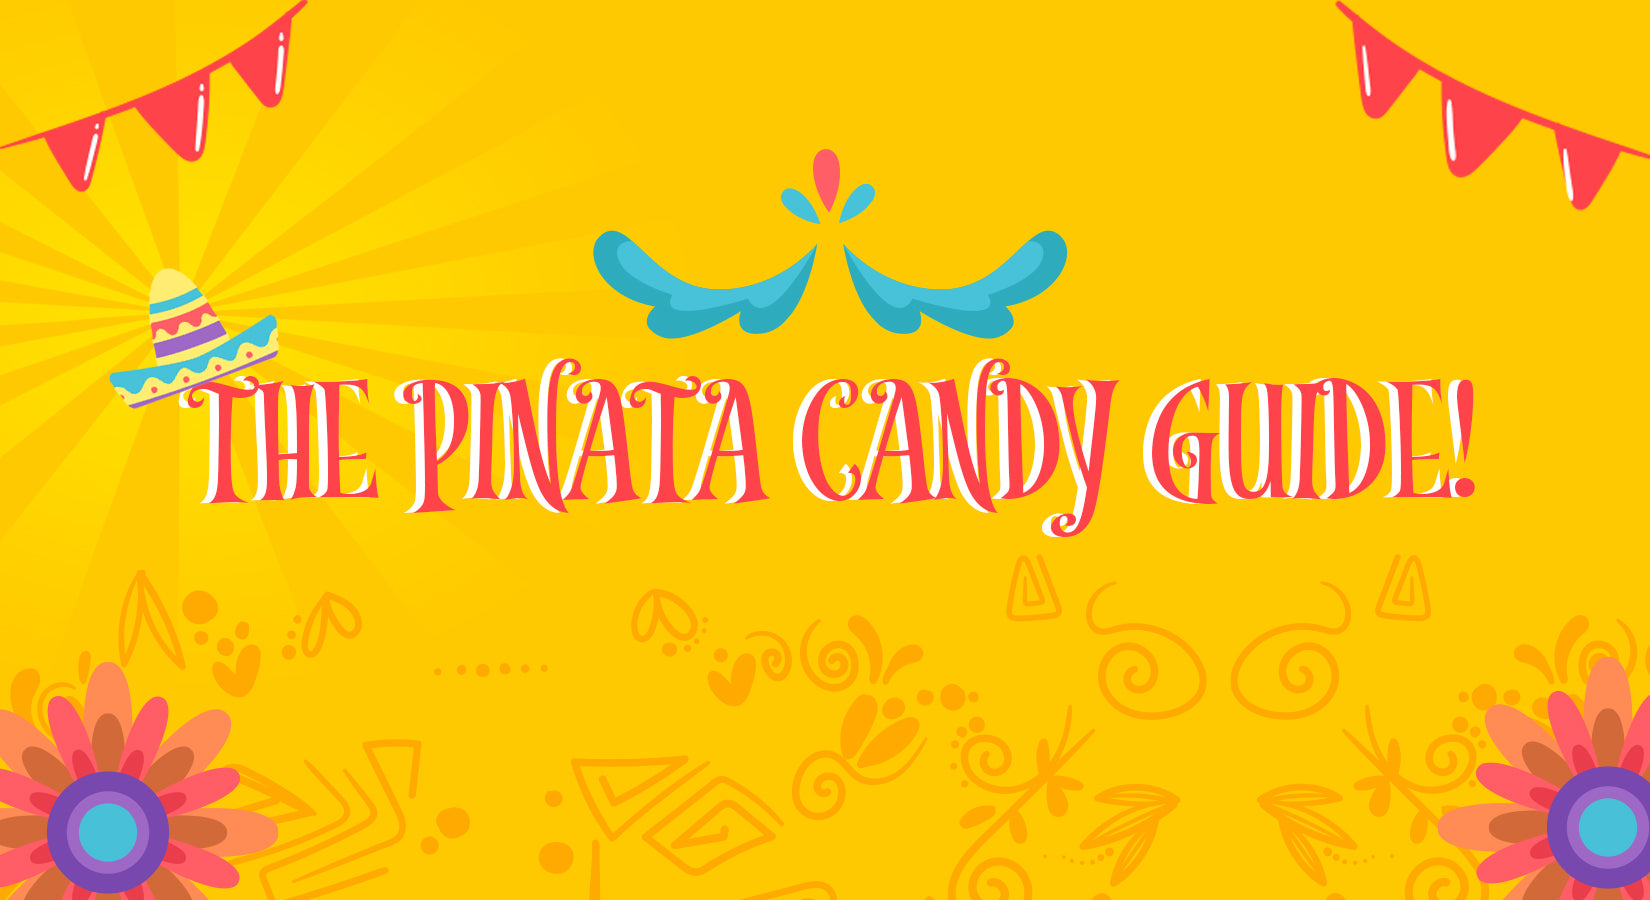 The Piñata Candy Guide